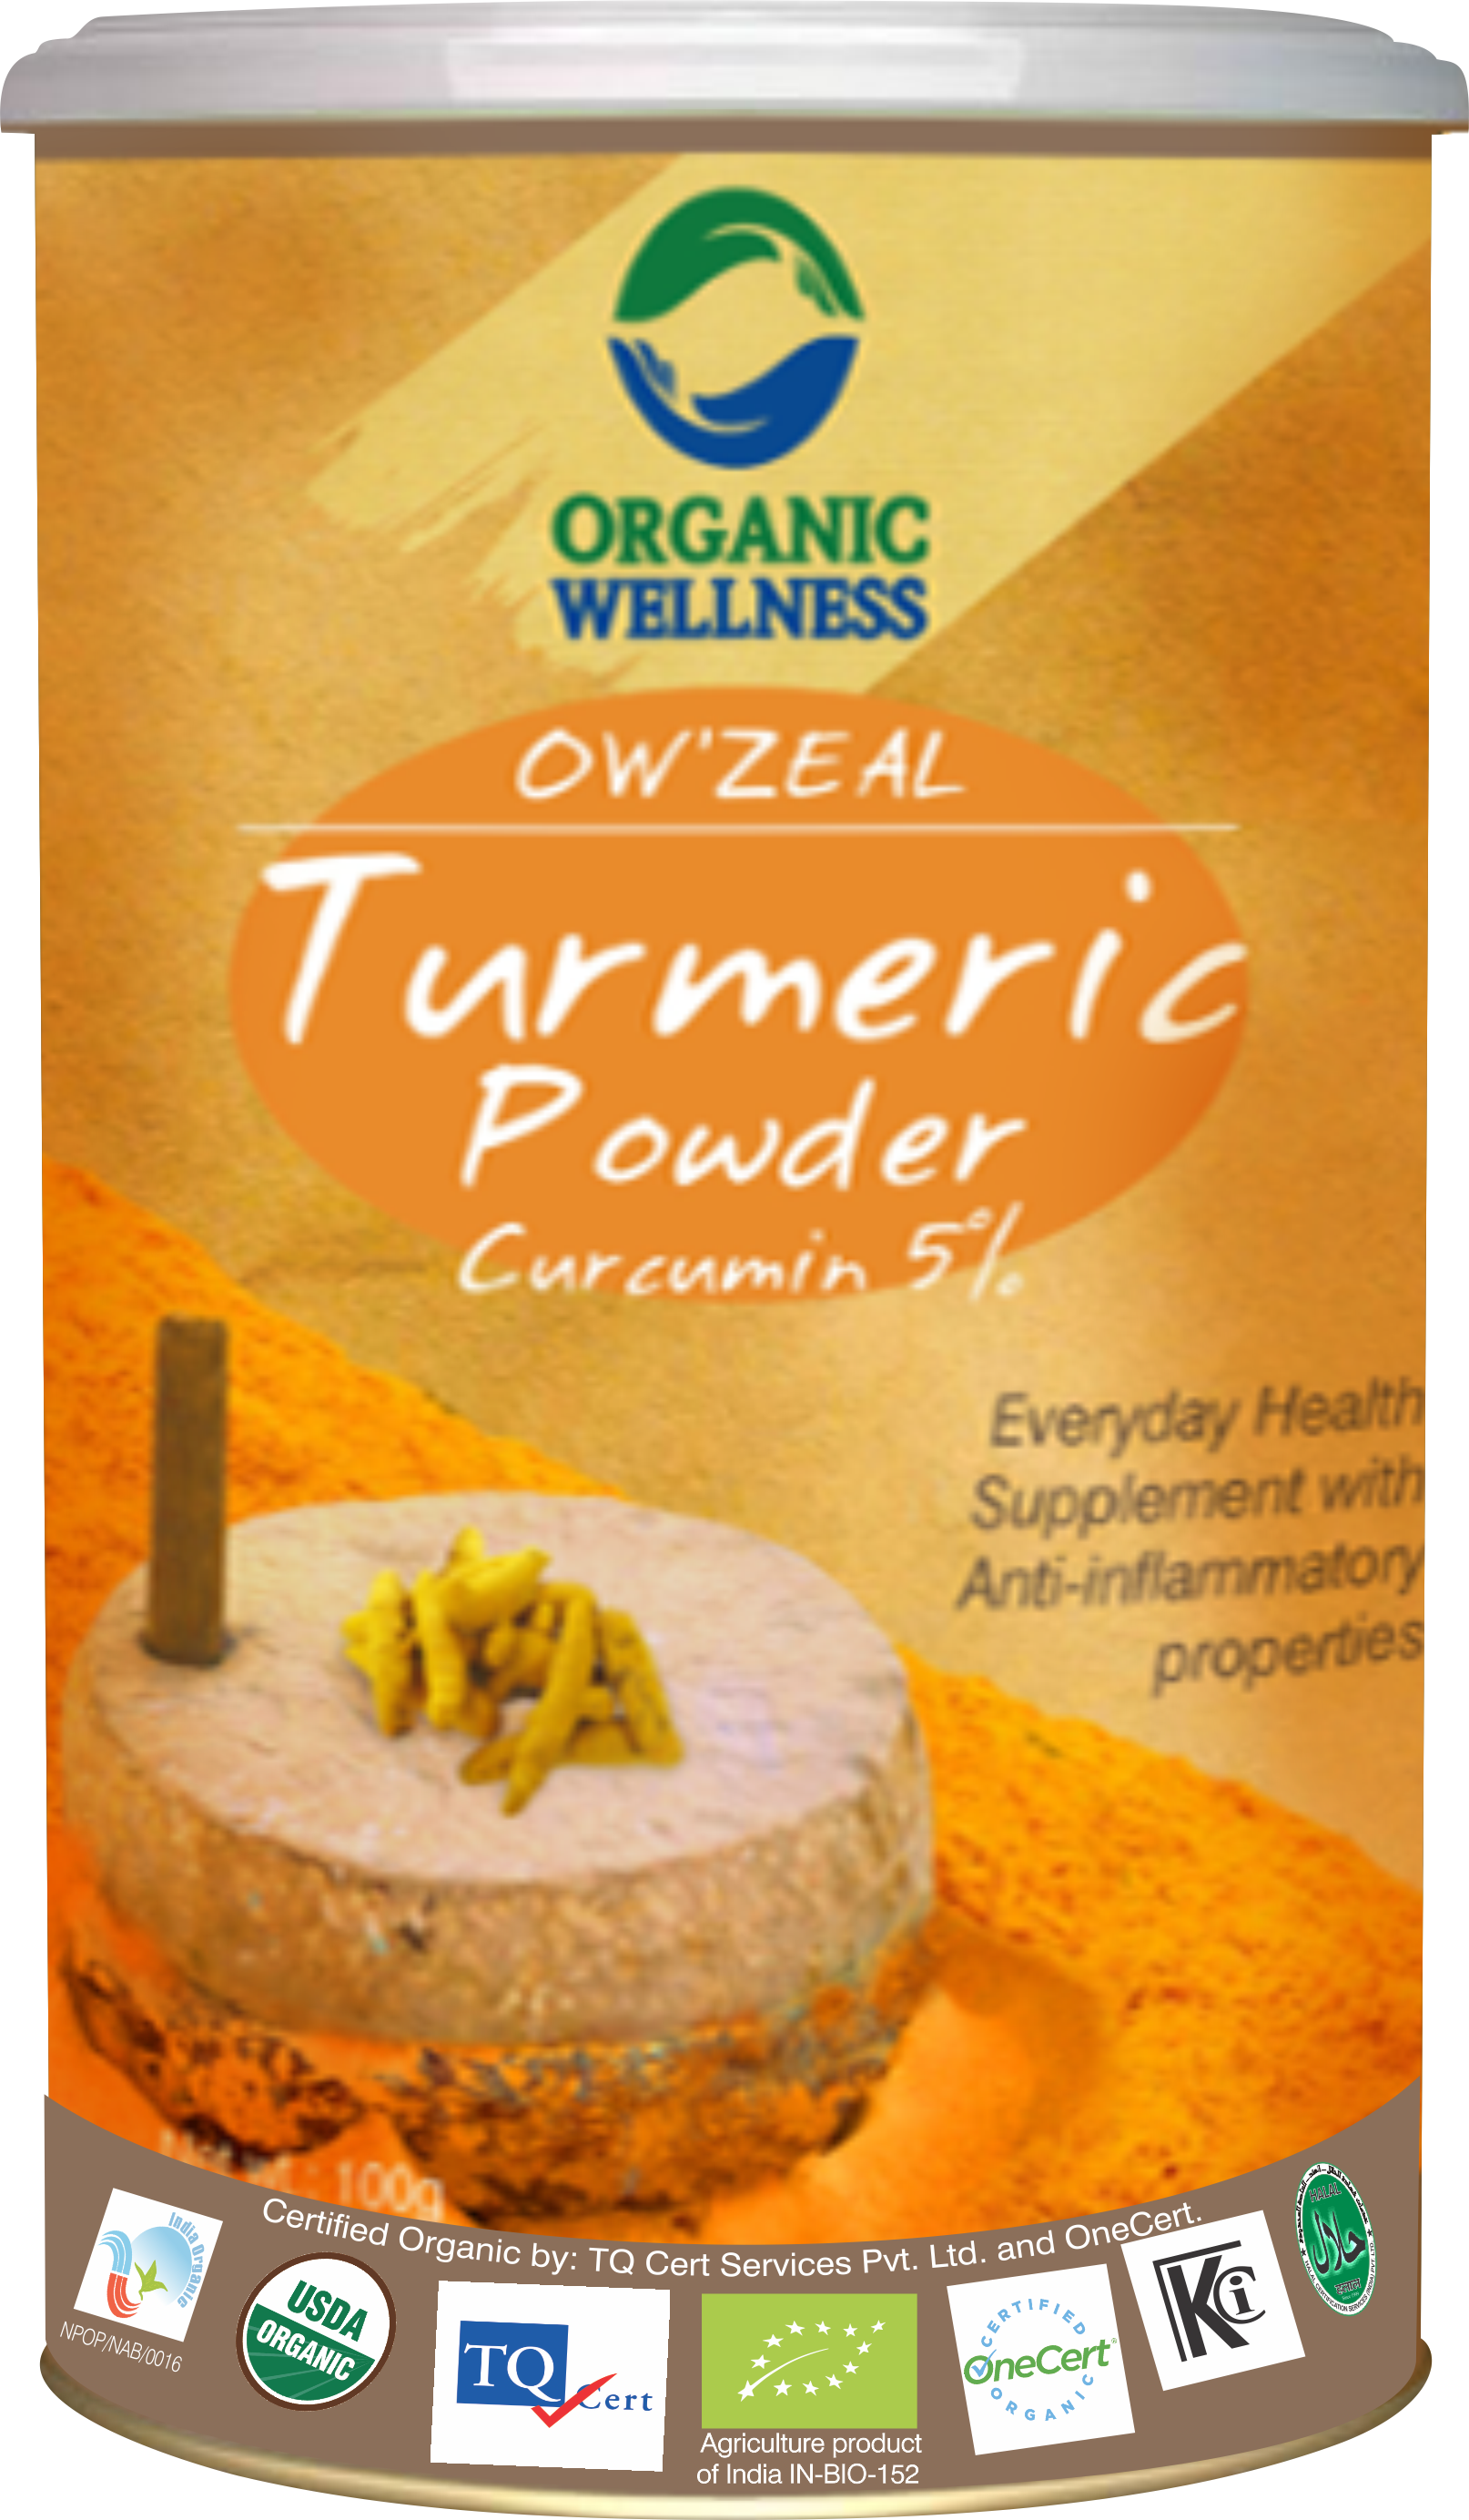 Buy Organic Wellness Zeal Turmeric Powder at Best Price Online